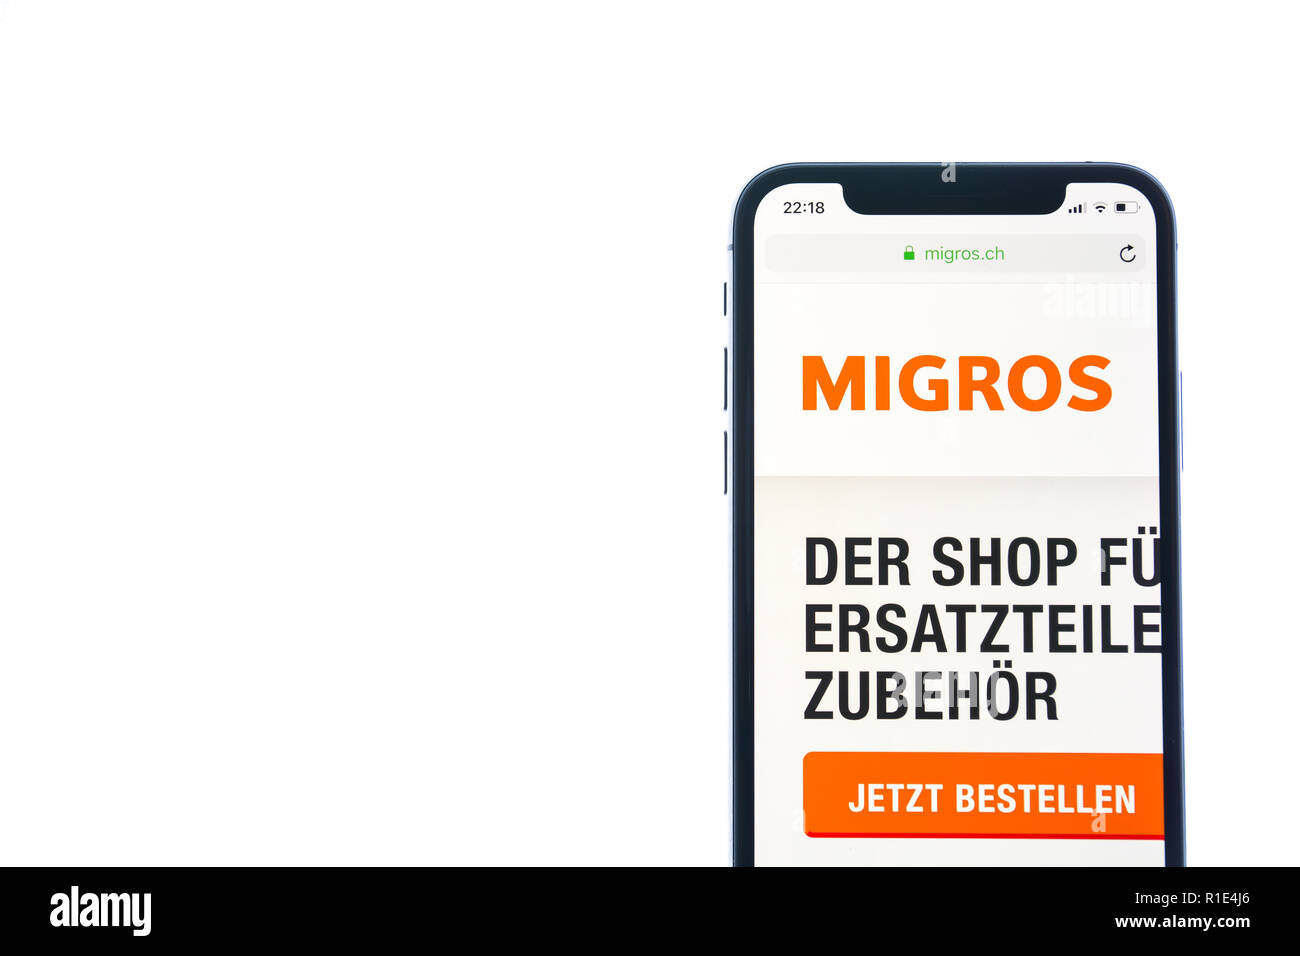 SOLOTHURN, SWITZERLAND - NOVEMBER 11, 2018: Migros logo displayed on a modern smartphone Stock Photo